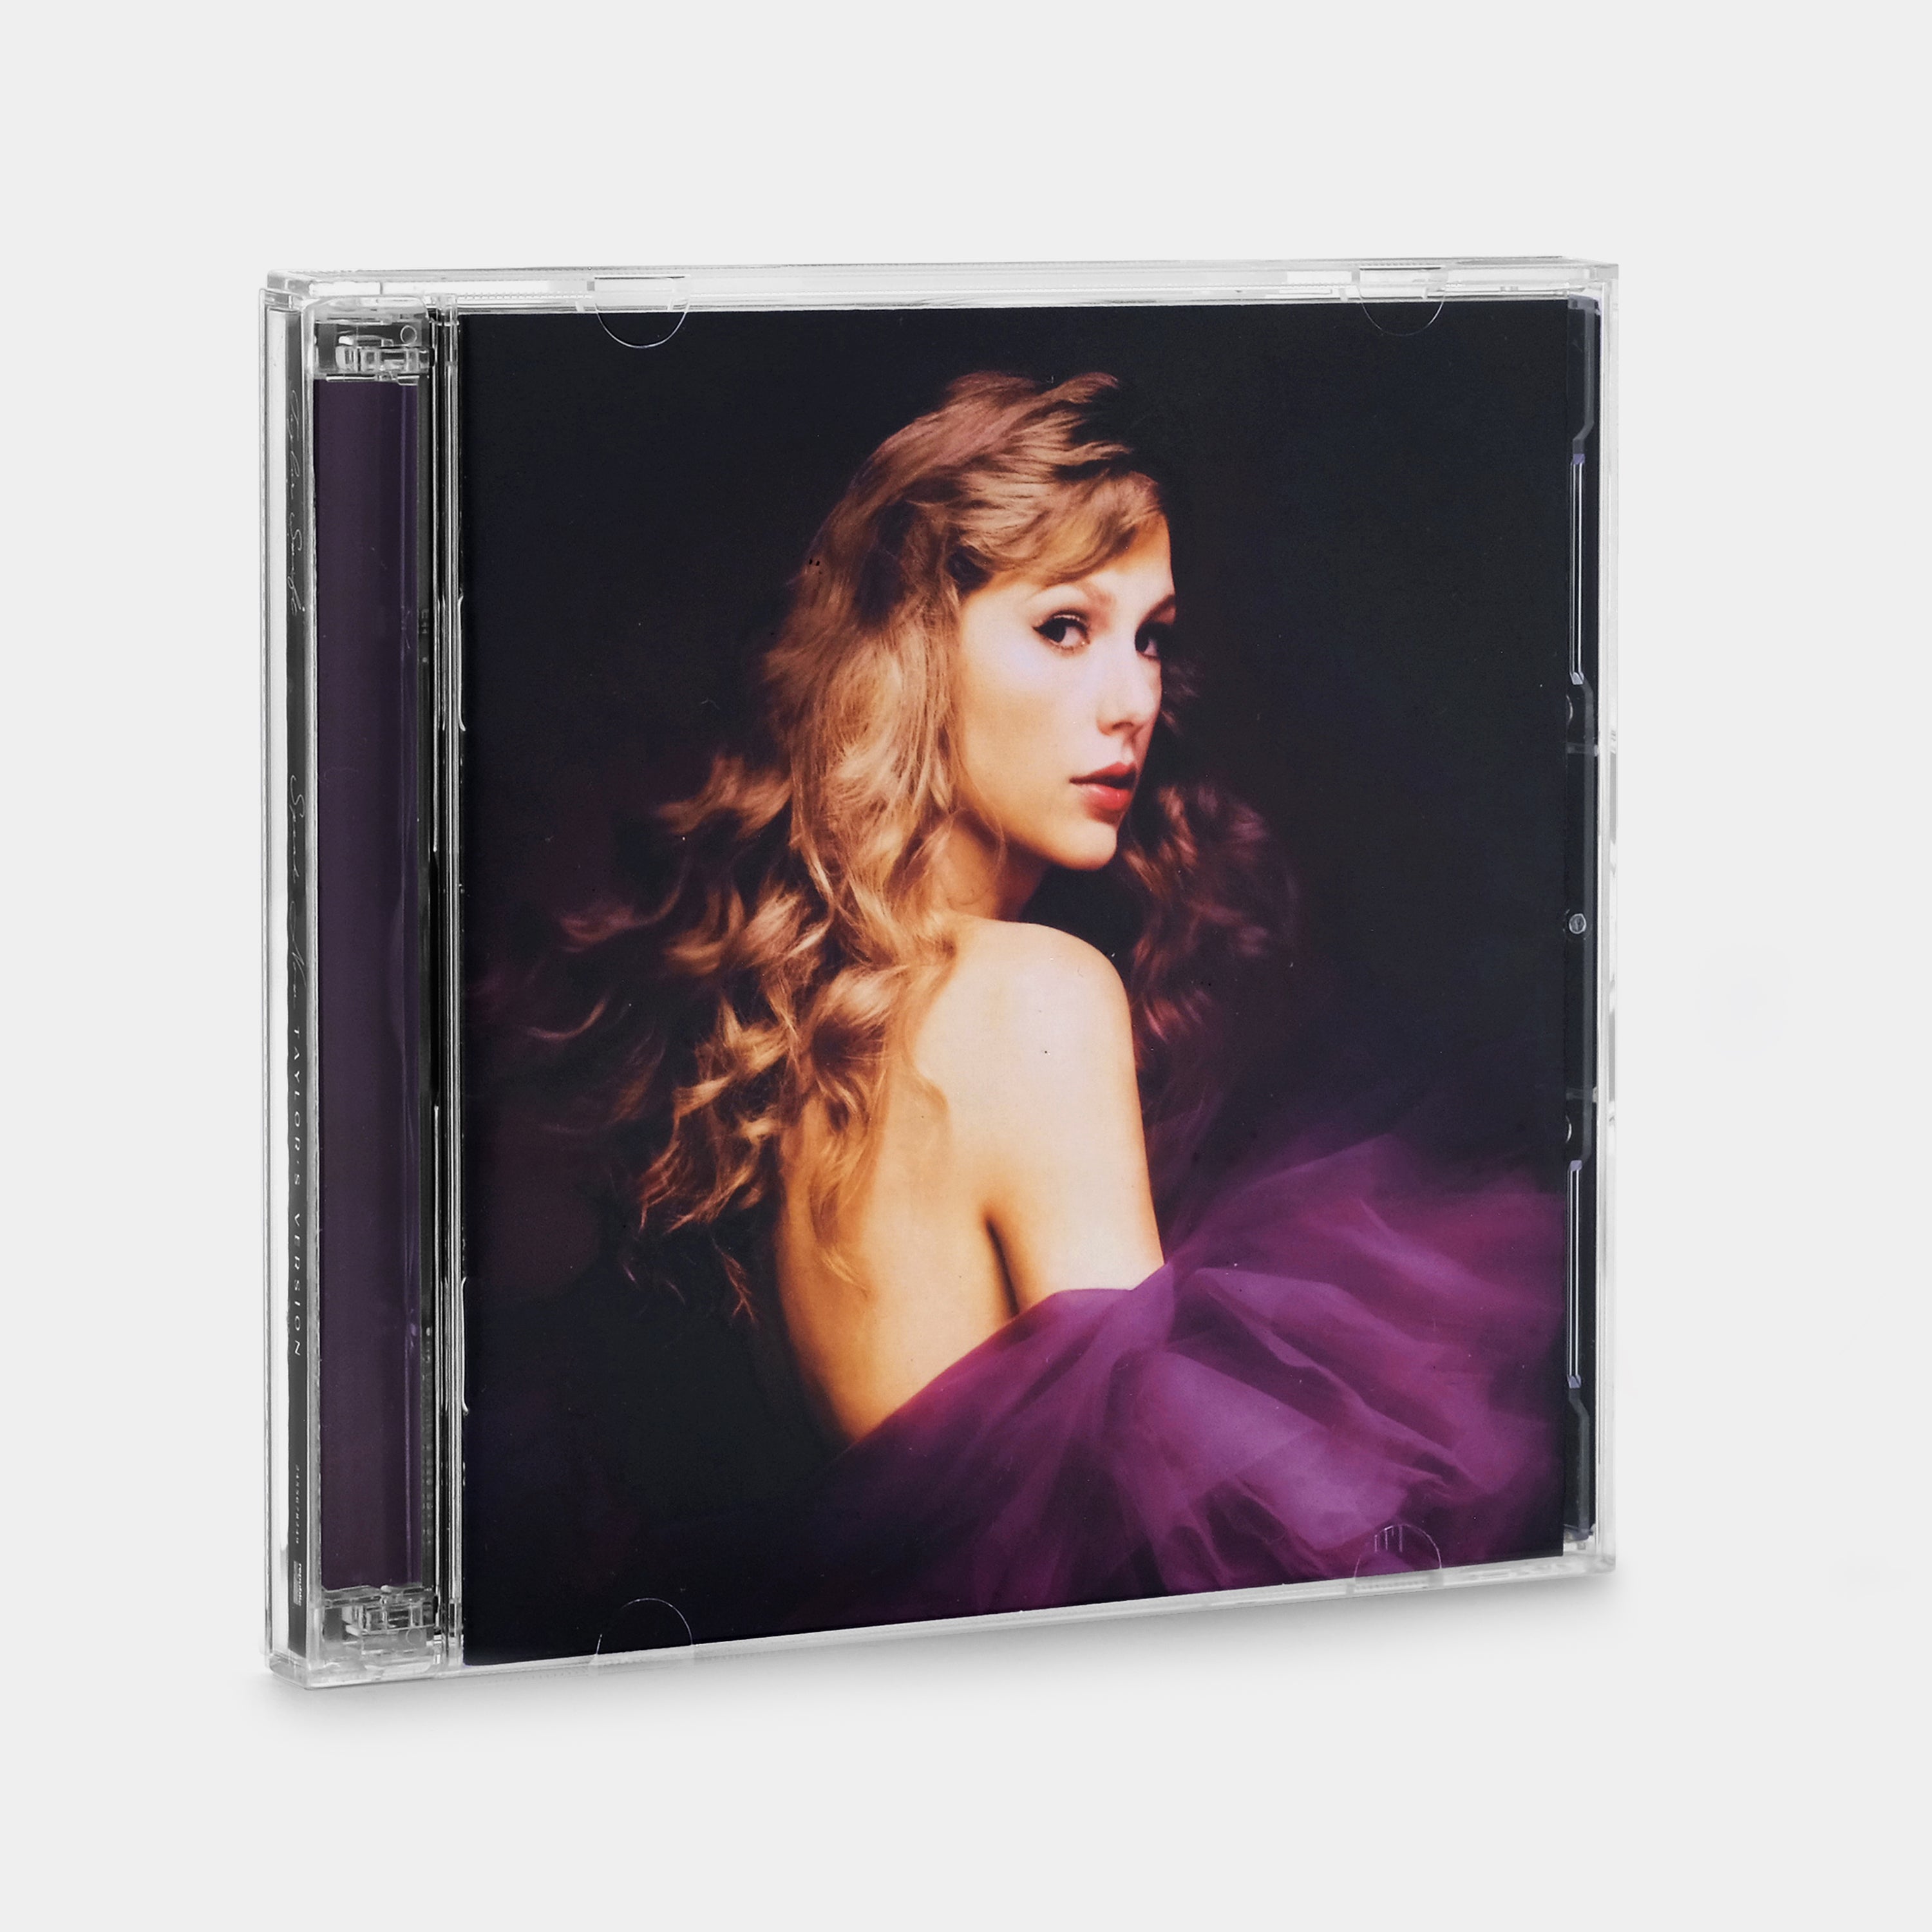 Taylor Swift - Speak Now (Taylor's Version) –